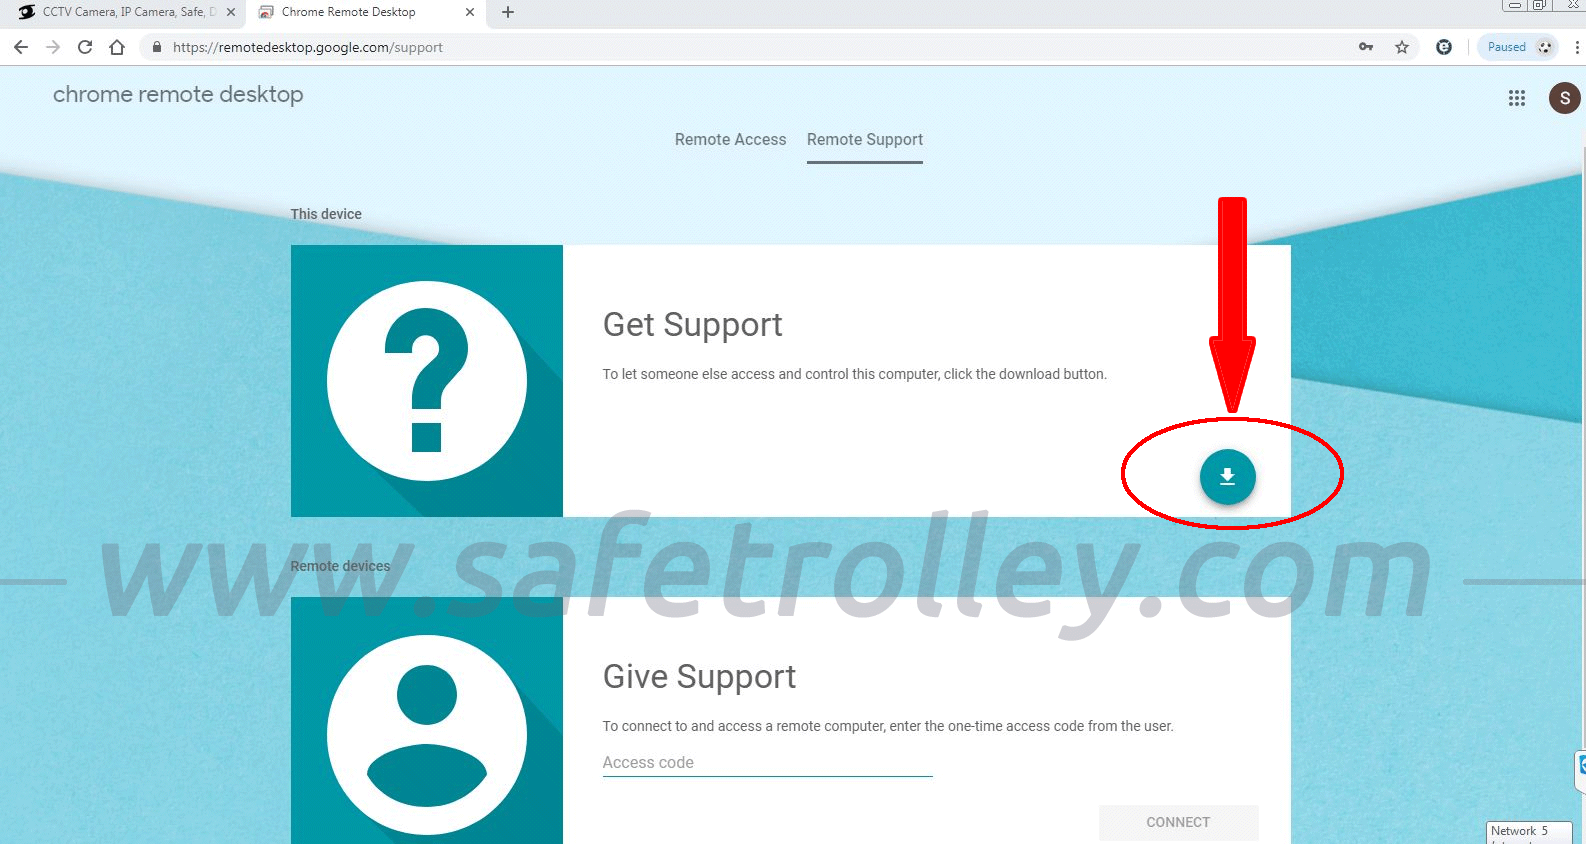 Get Support via Google Chrome Remote Desktop